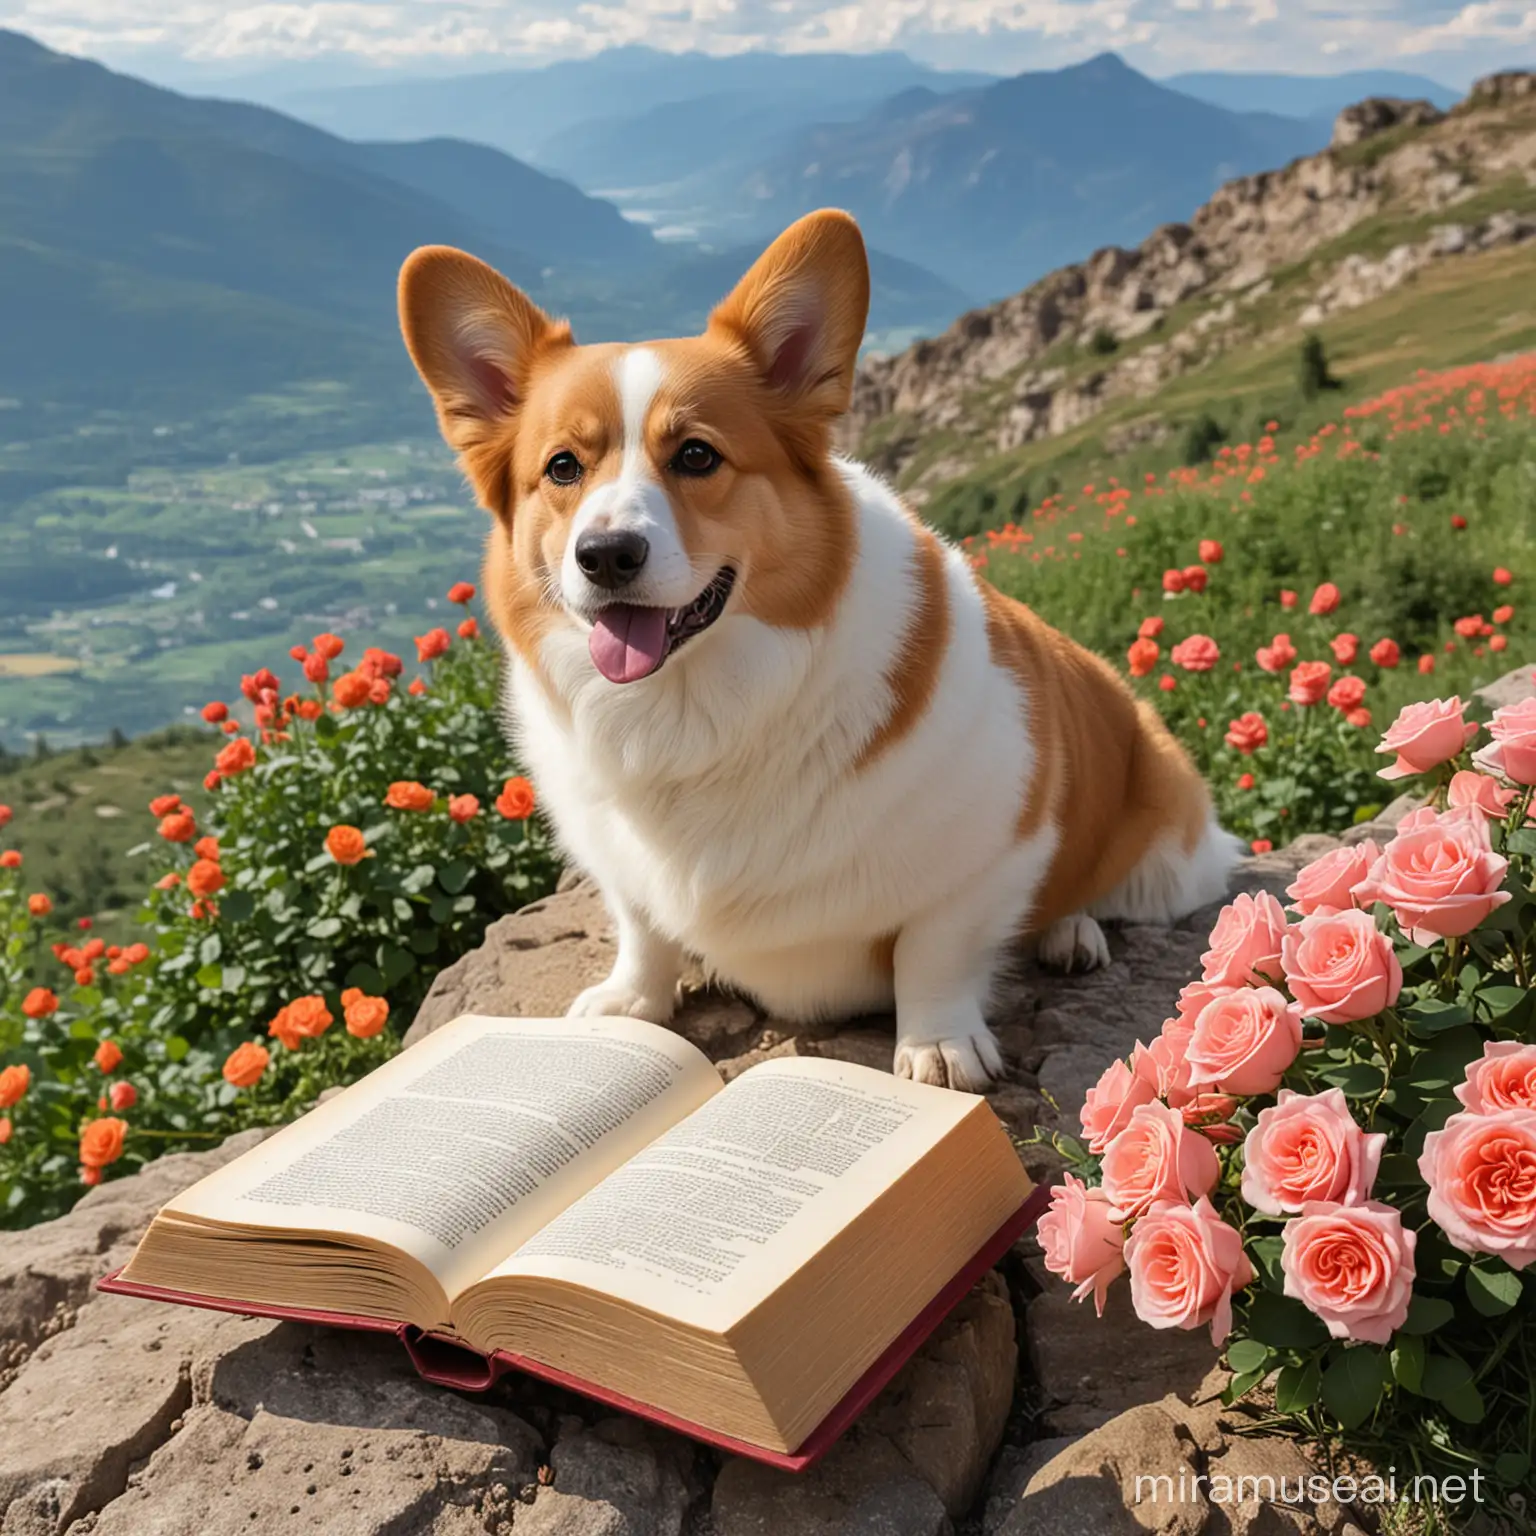 Corgi Enjoying Mountain Serenity While Reading Among Roses